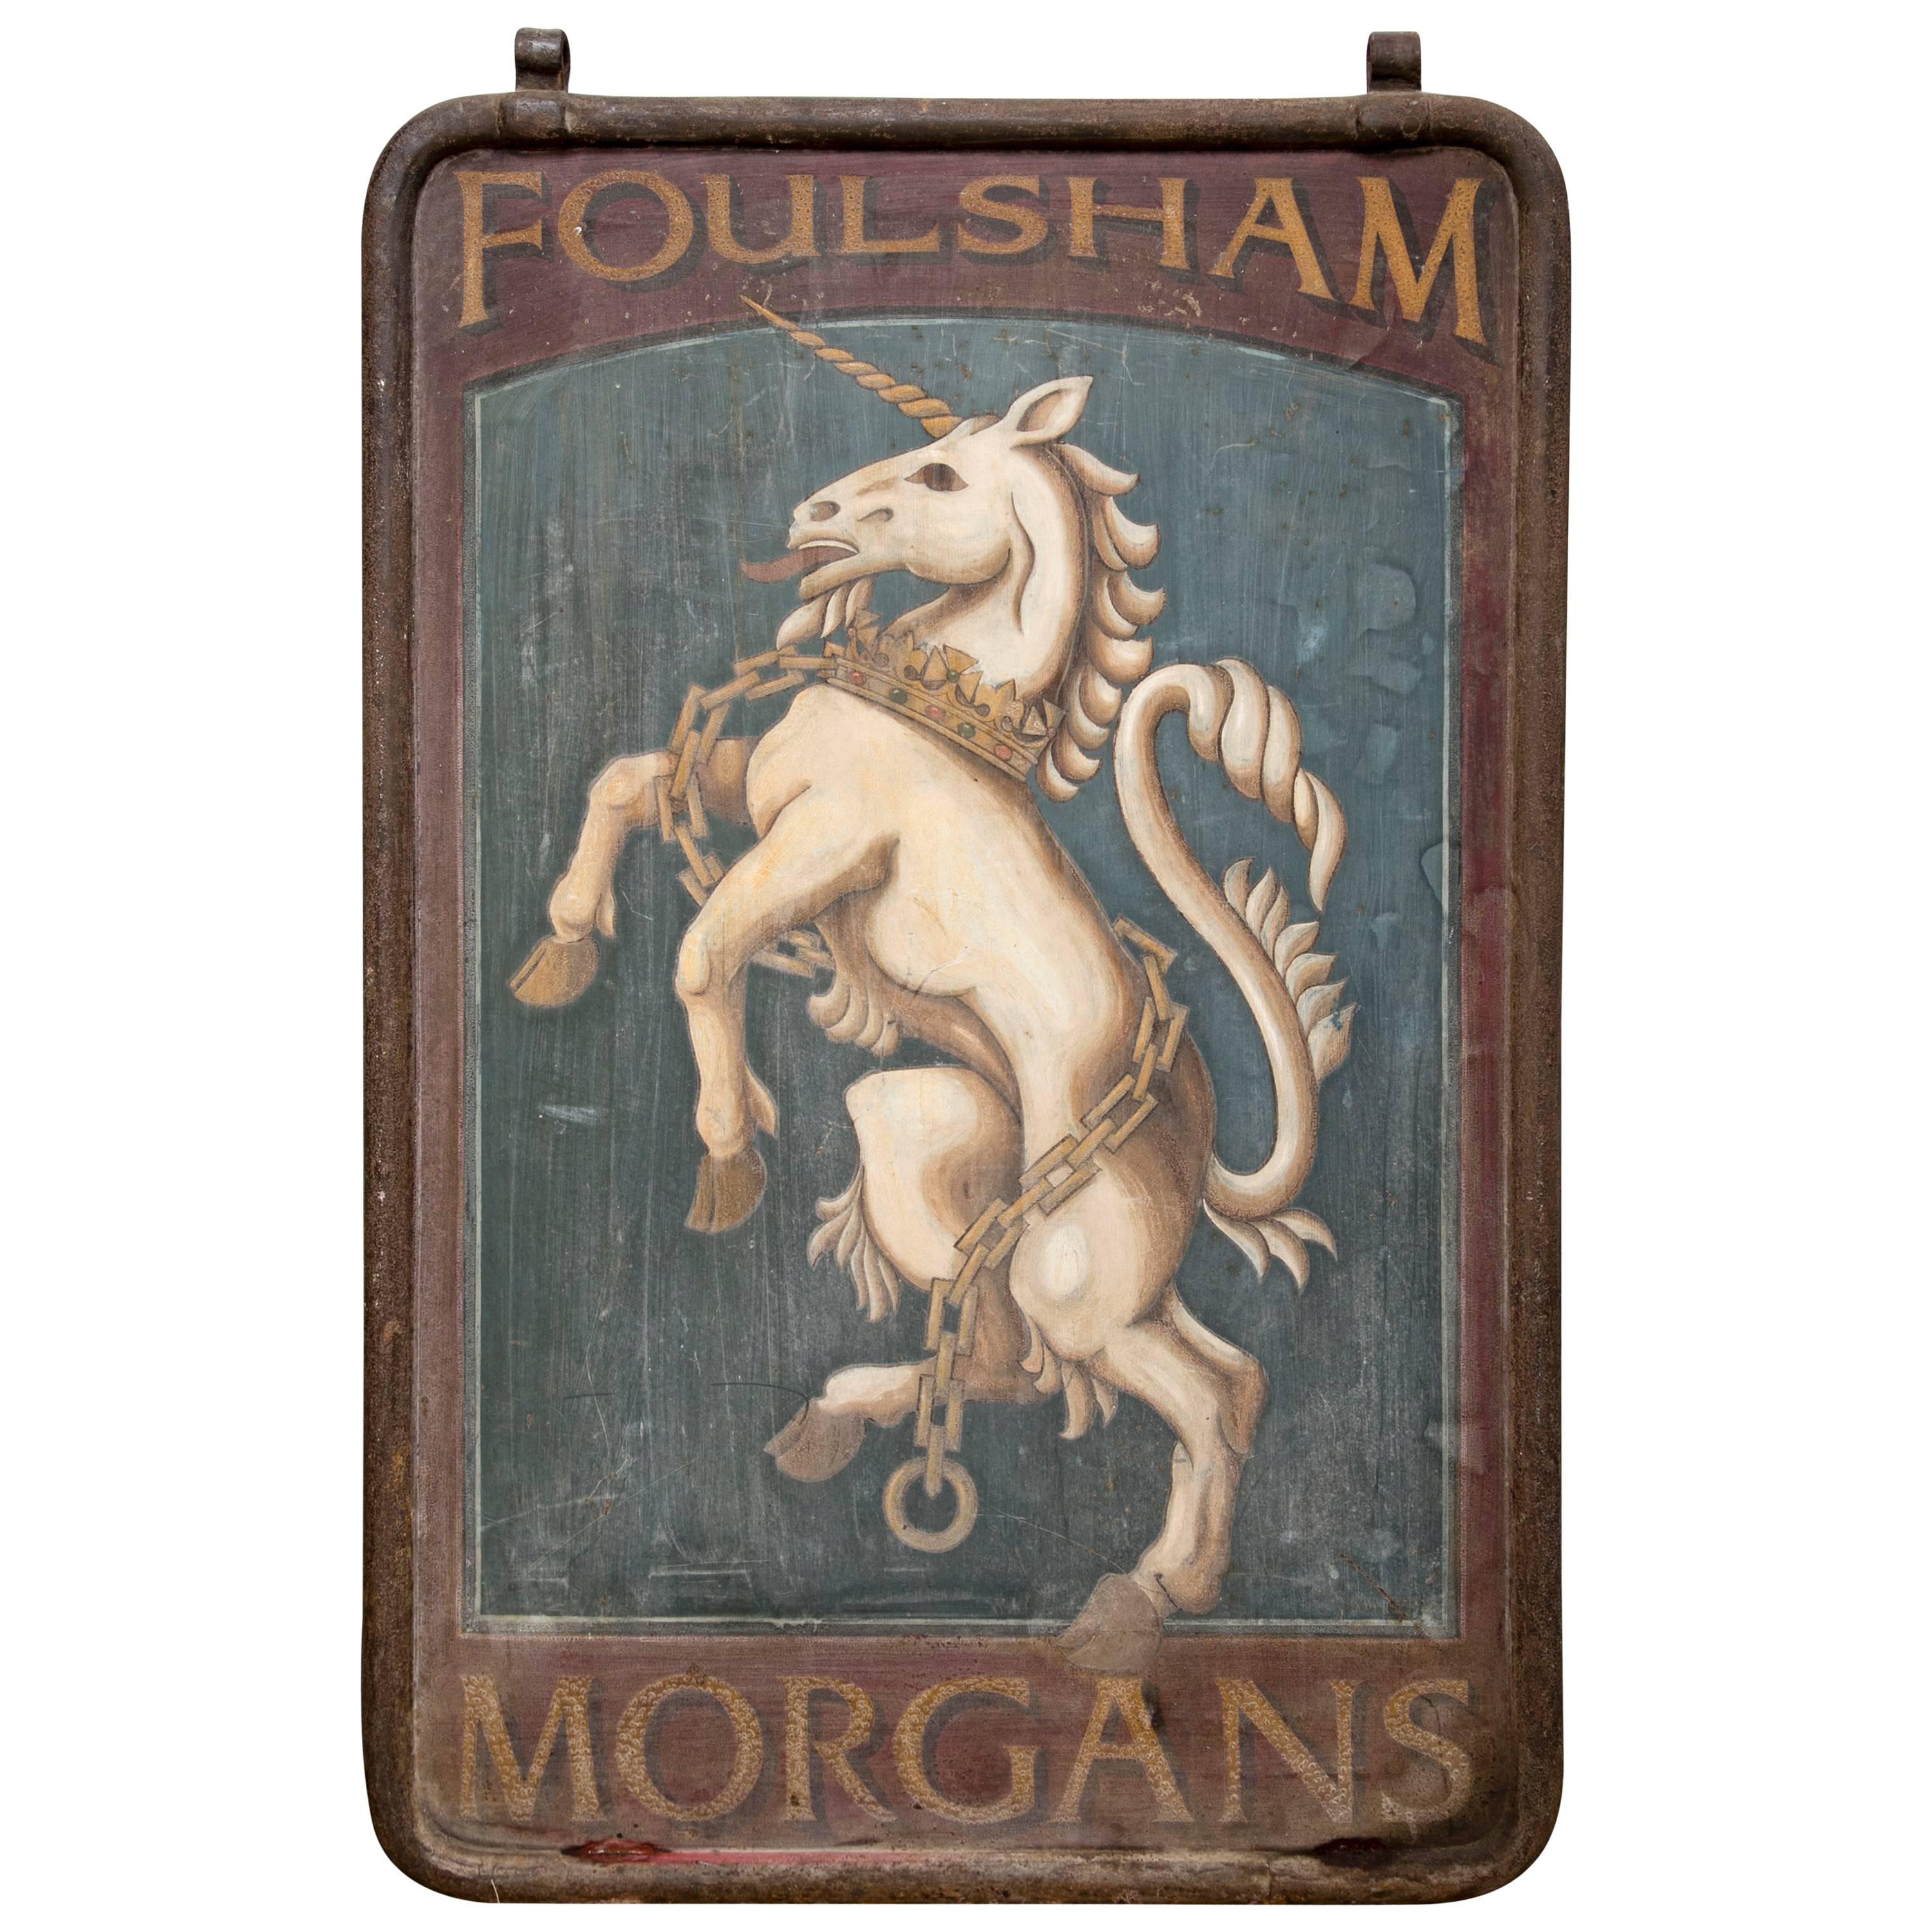 English Pub Sign "Foulsham Morgans"